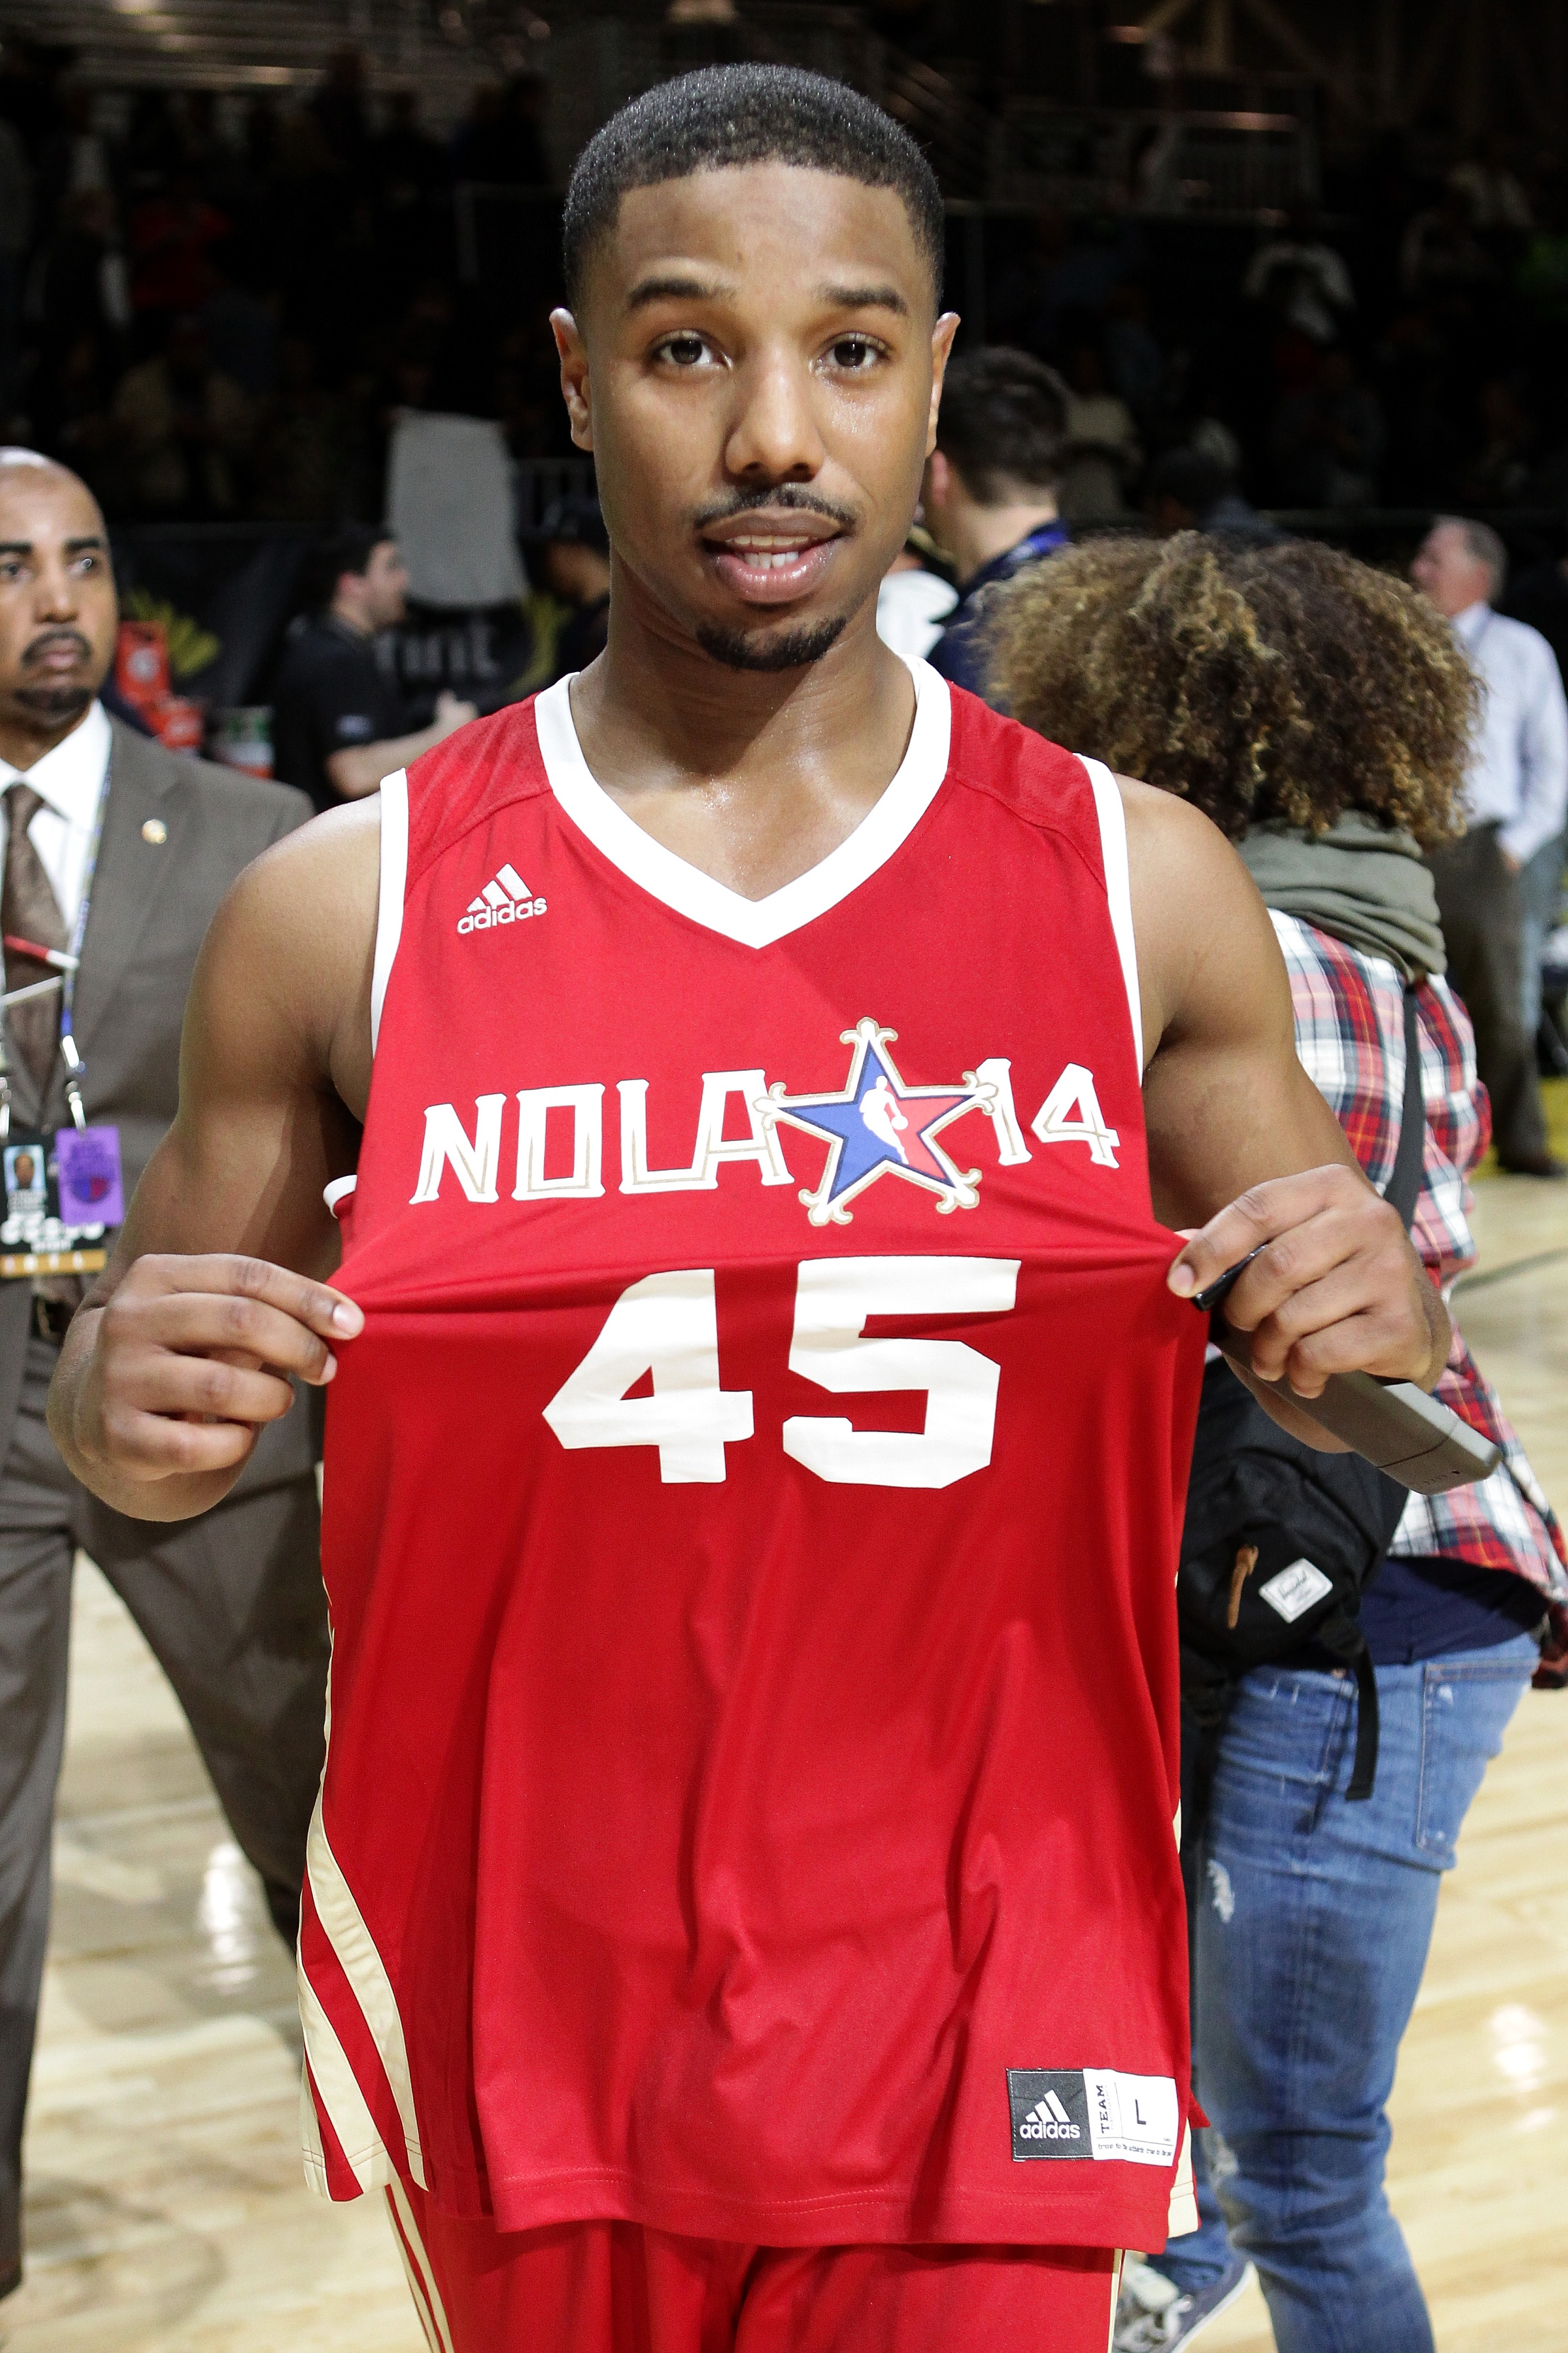 NBA All-Star Celebrity Game 2014